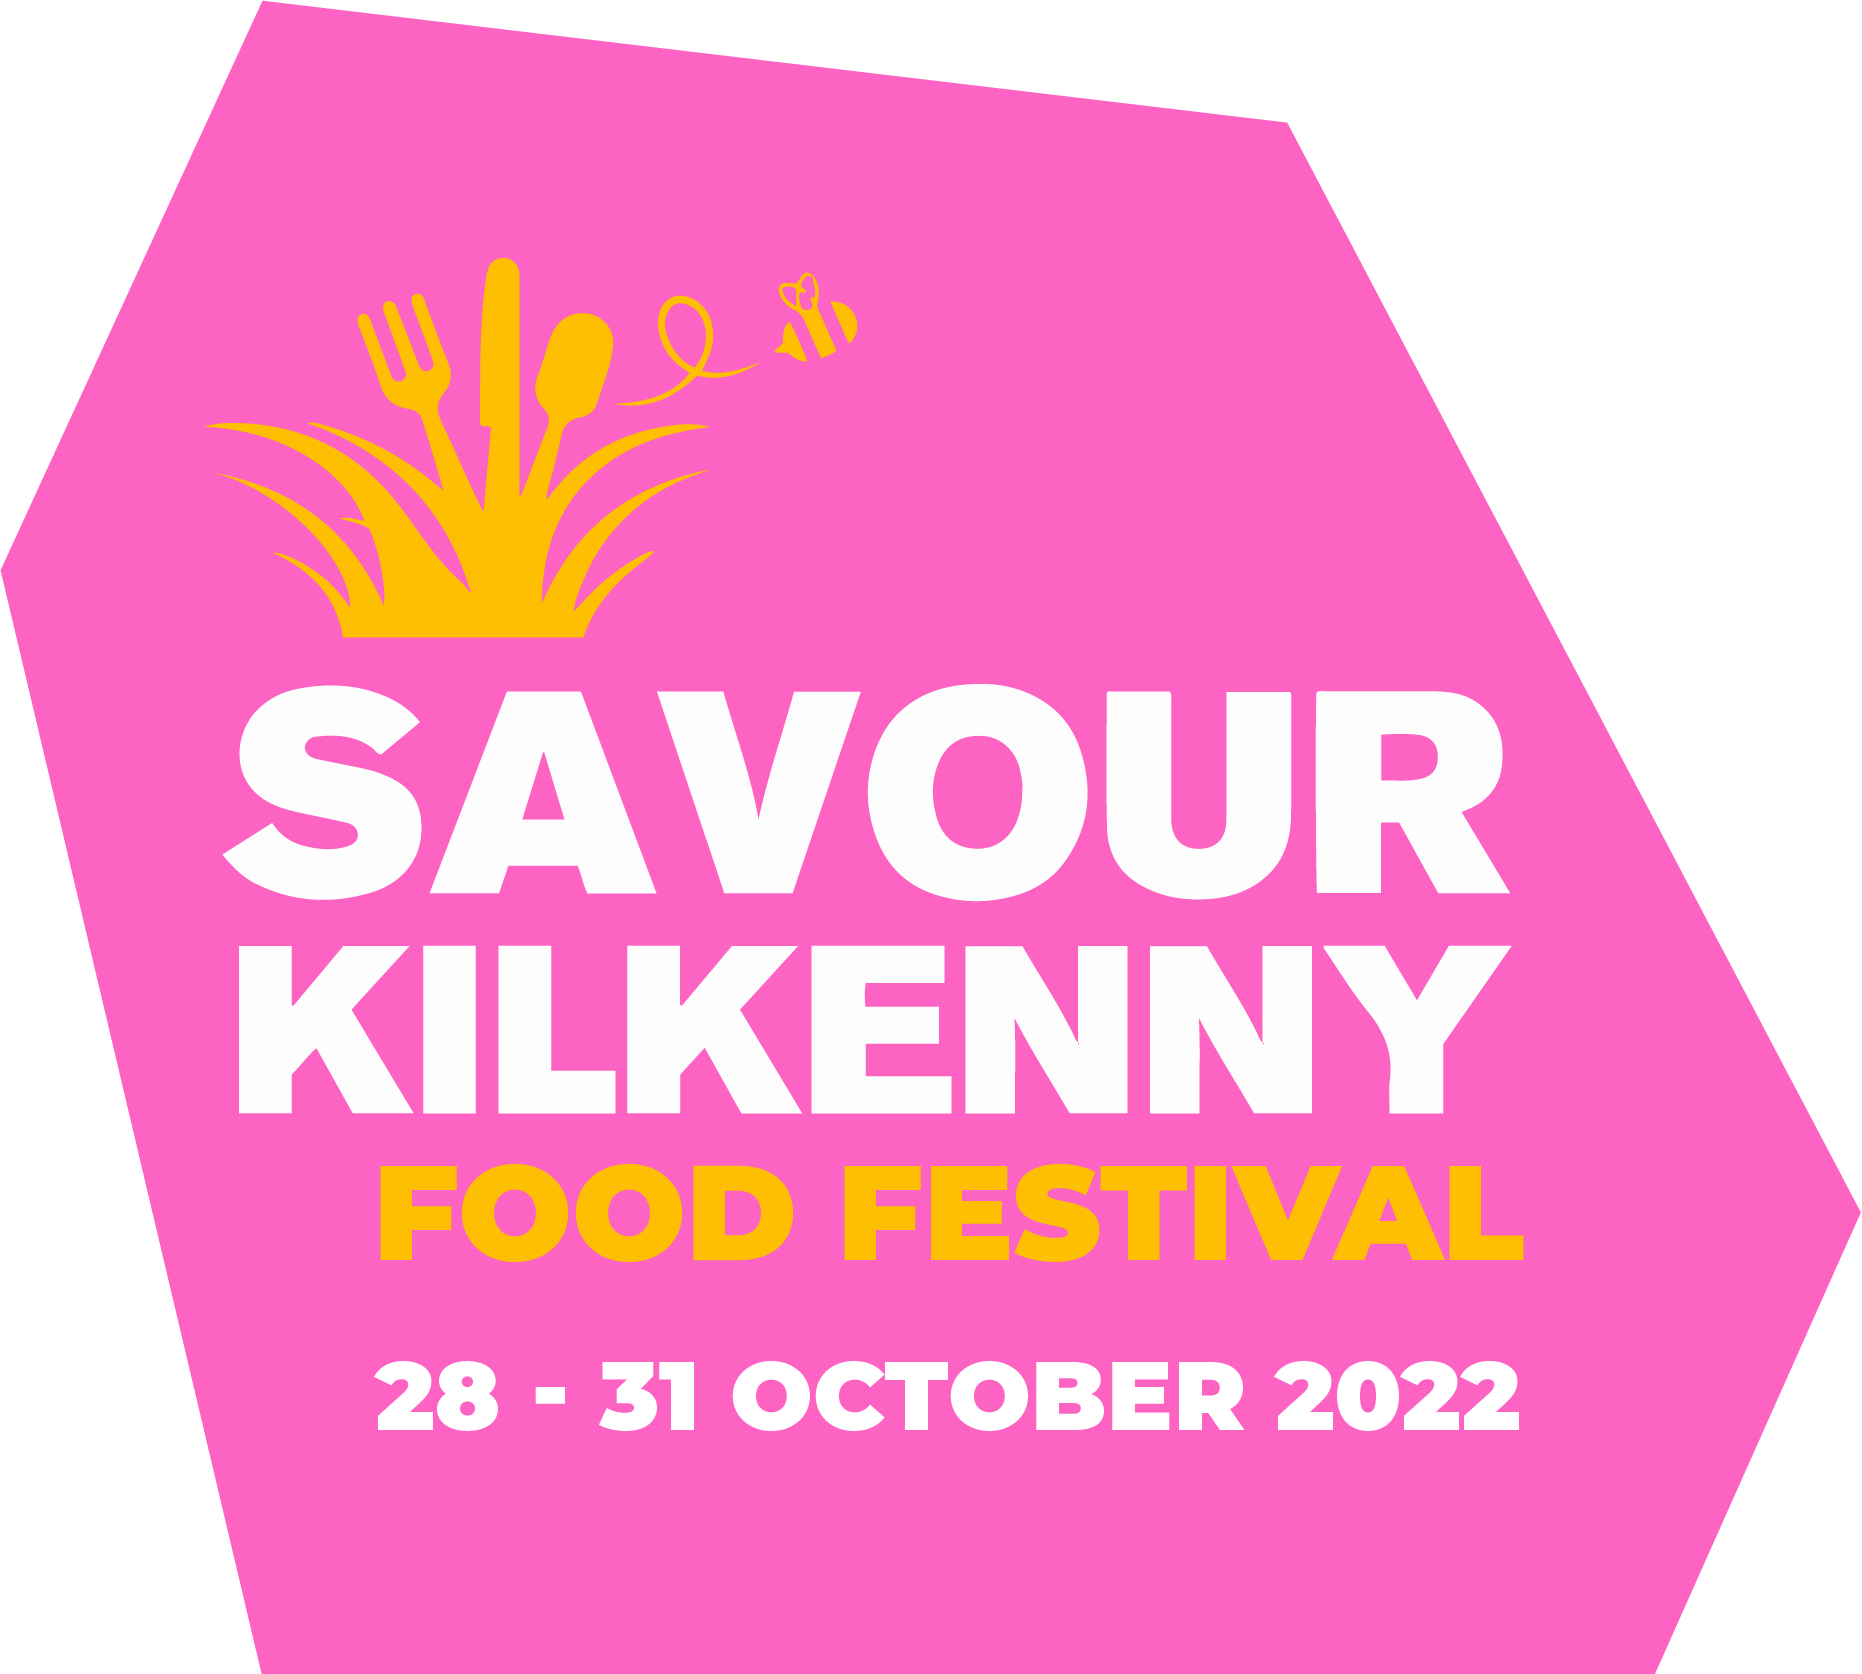 Kilkenny Food Festival